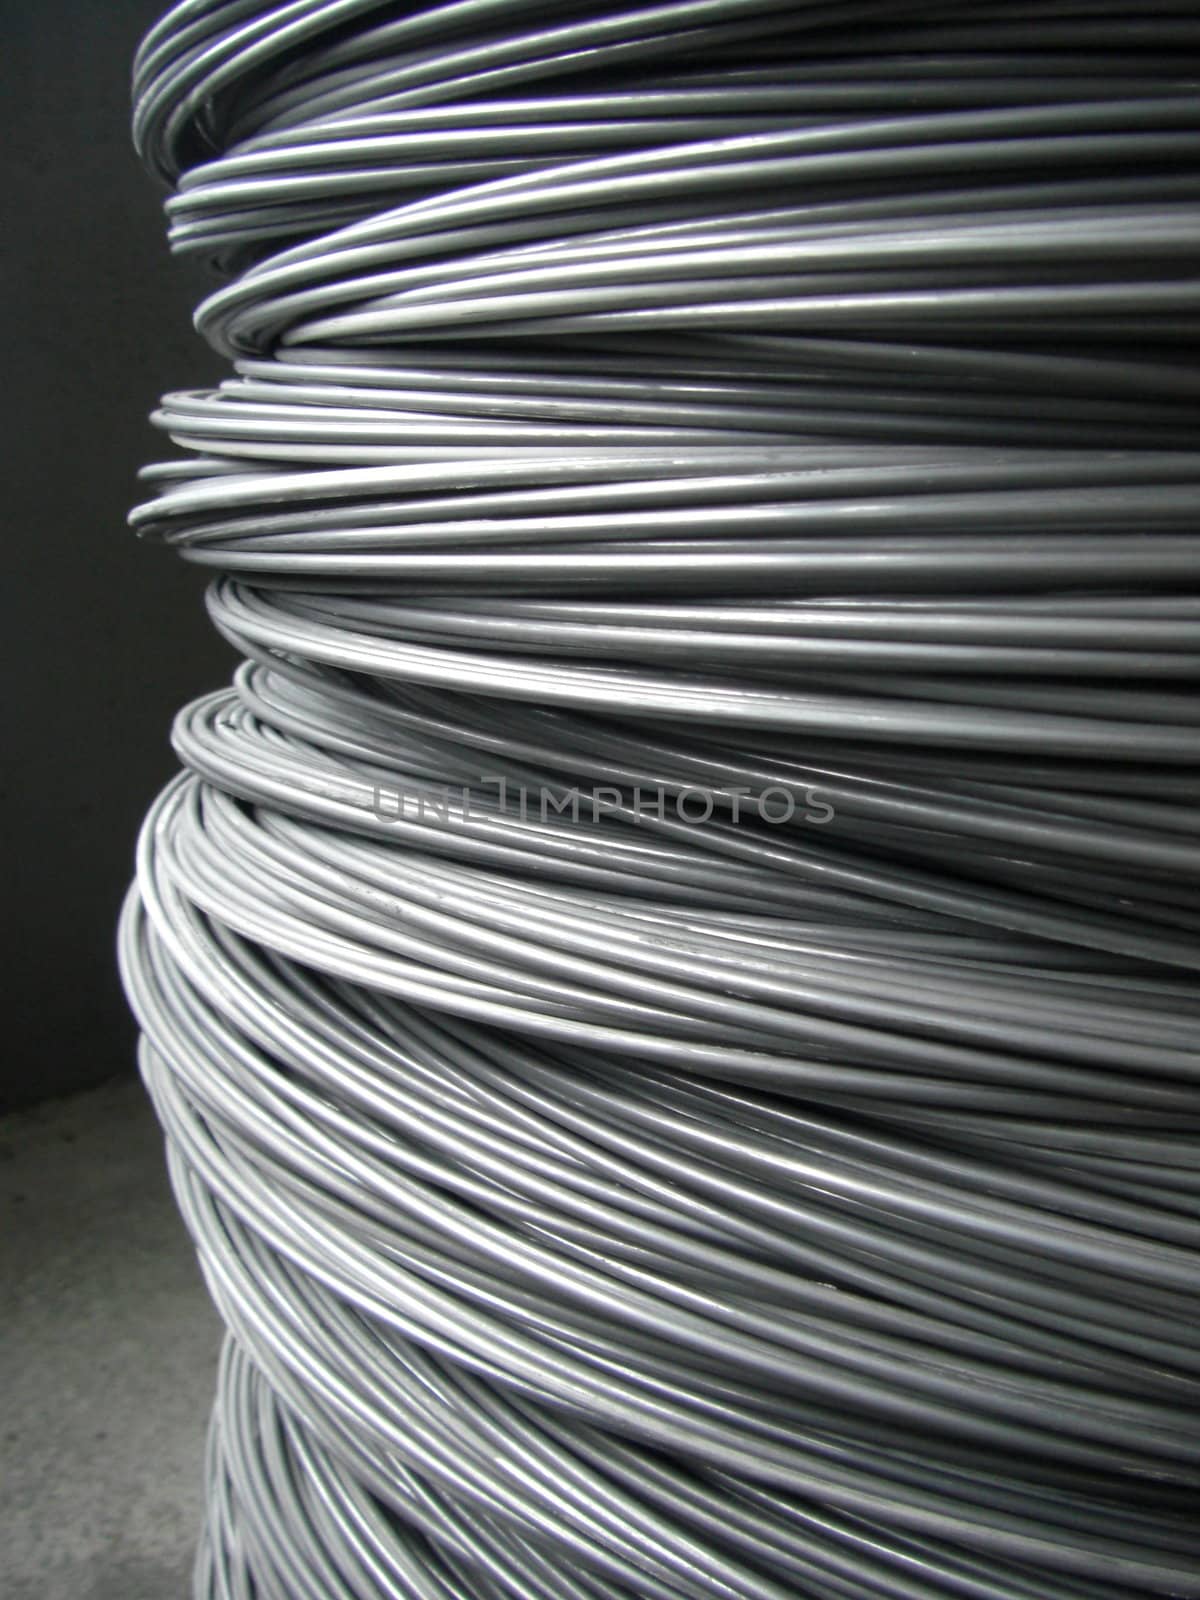 Steel wire by Olymp78